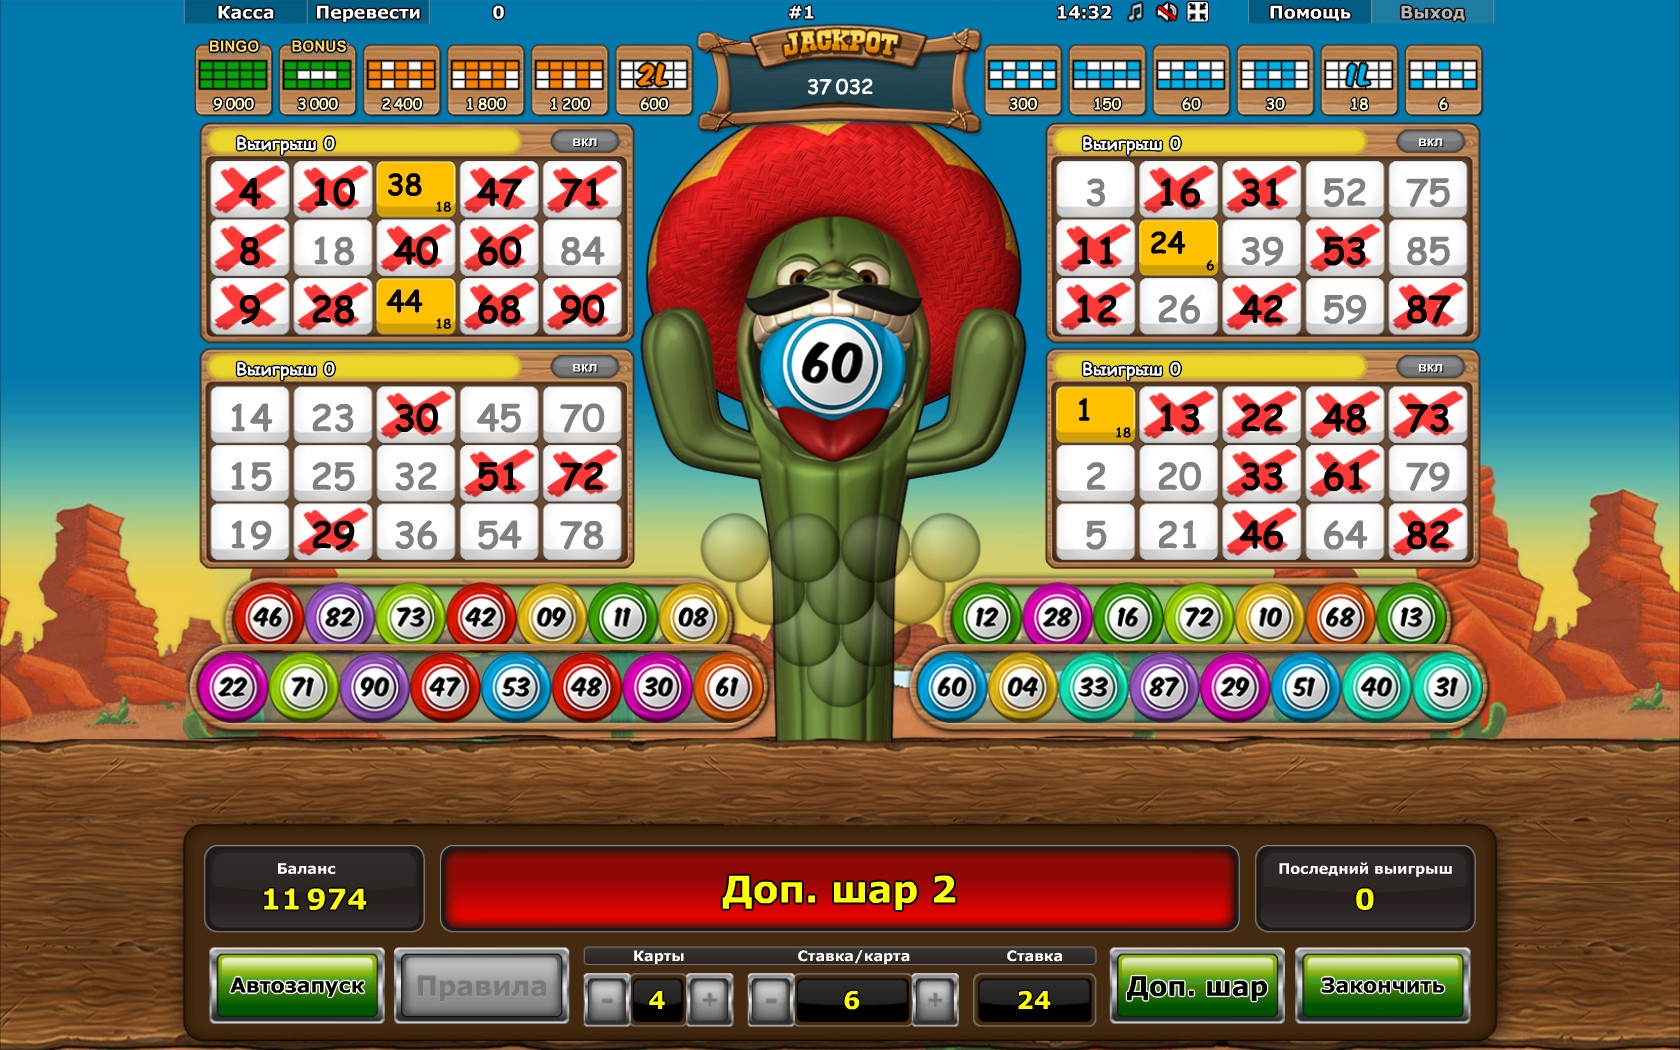 Crazy Cactus Bingo (Crazy Cactus Bingo) from category Slots